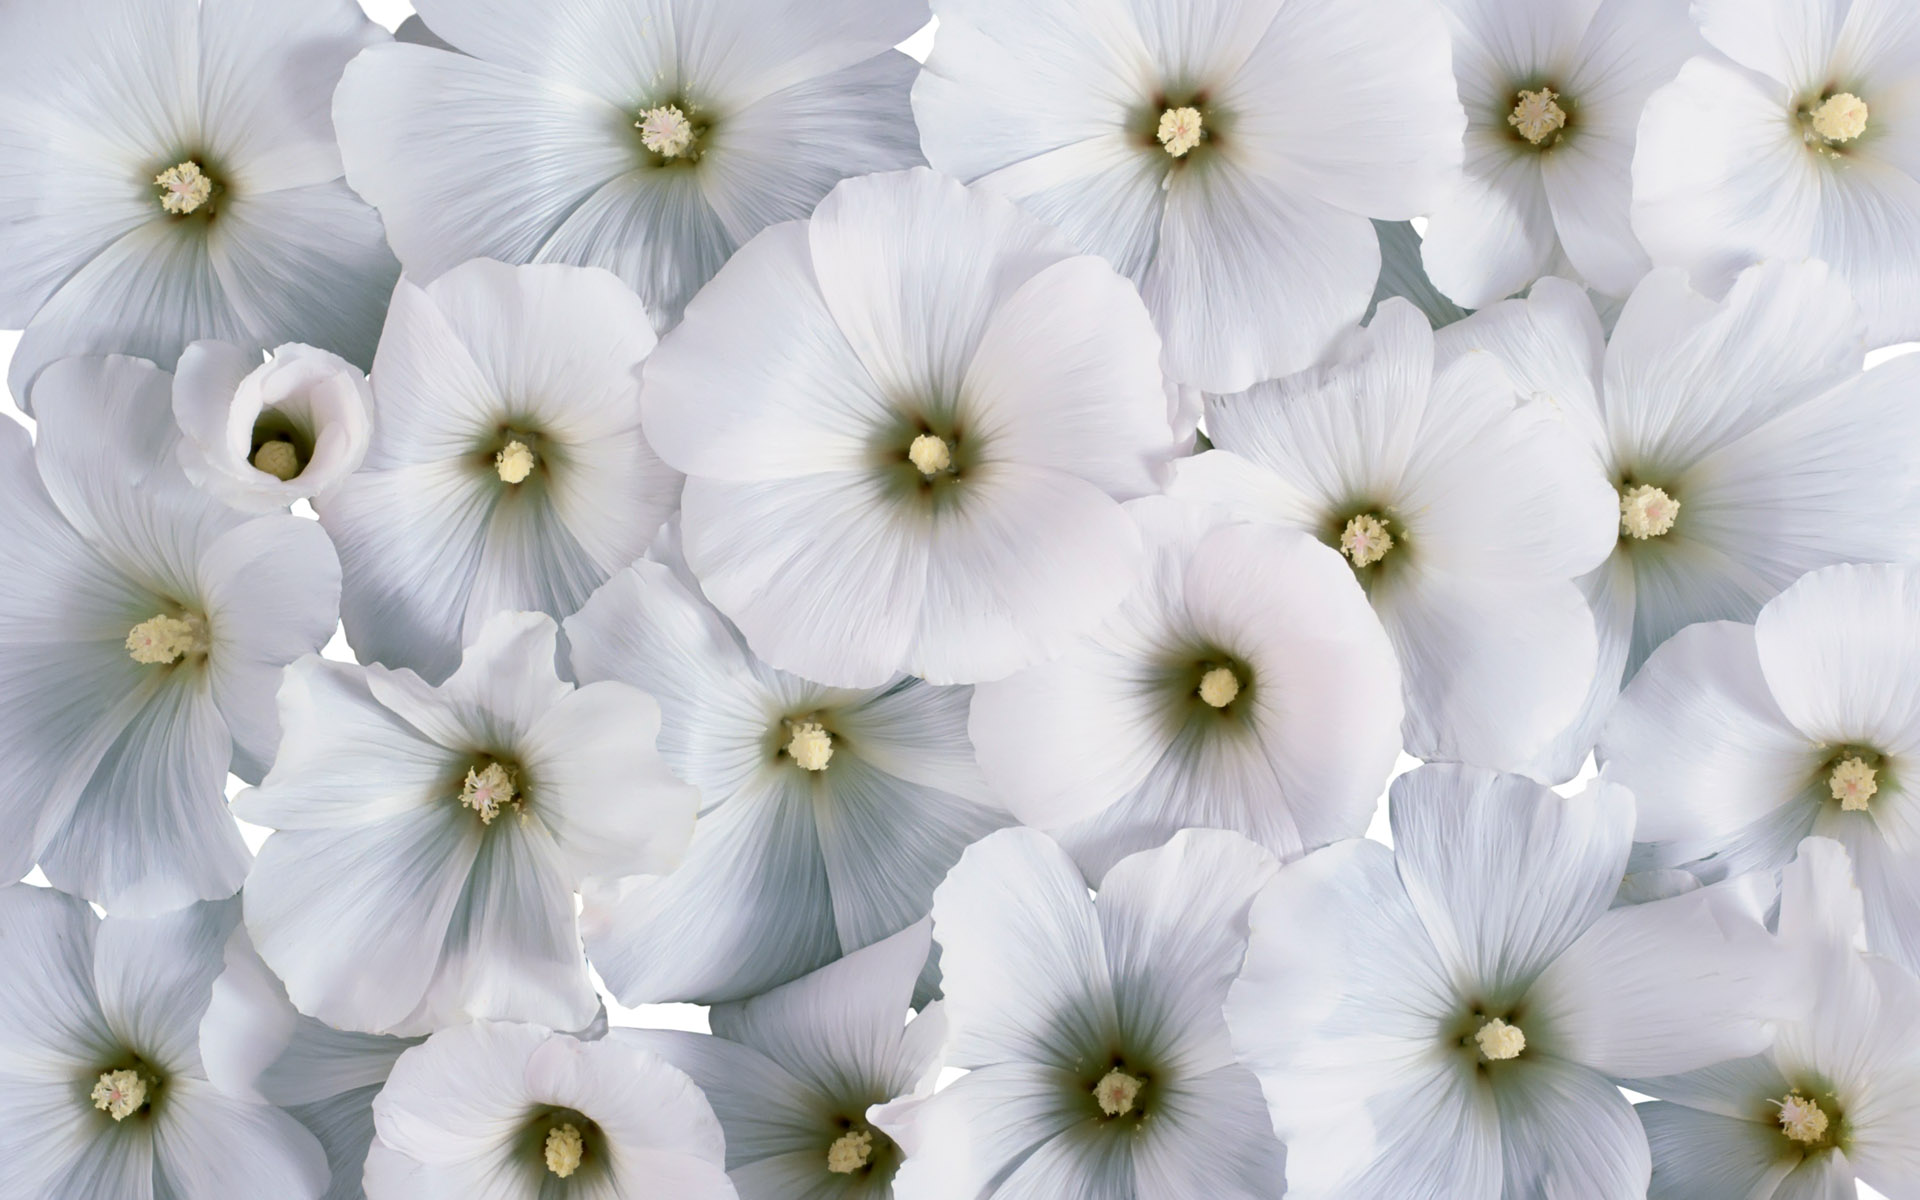 Cool White Flowers wallpaper